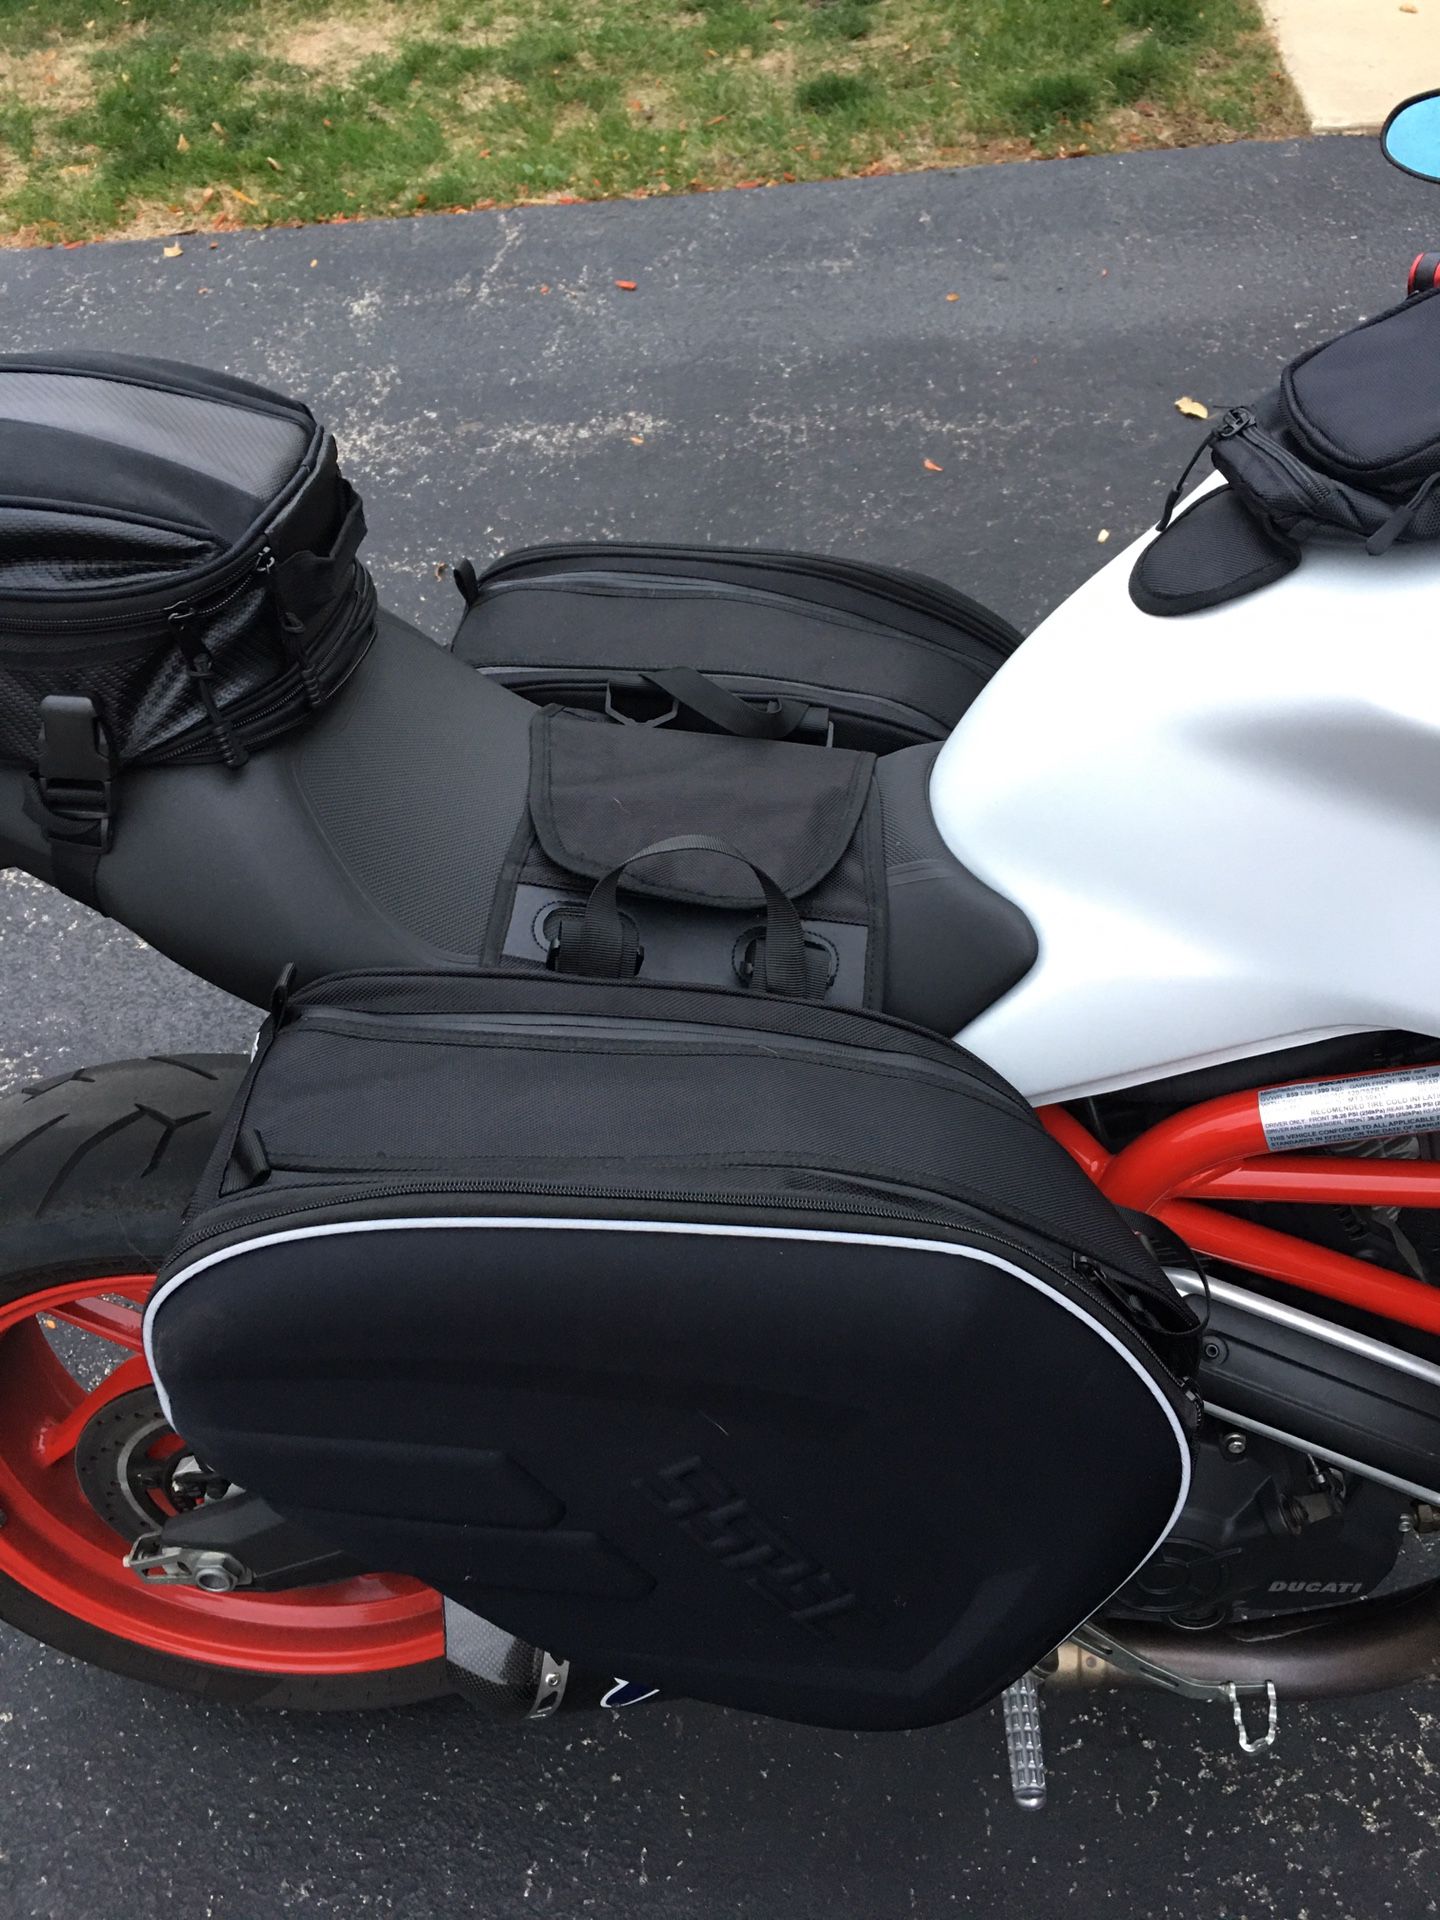 Motorcycle hard luggage bags